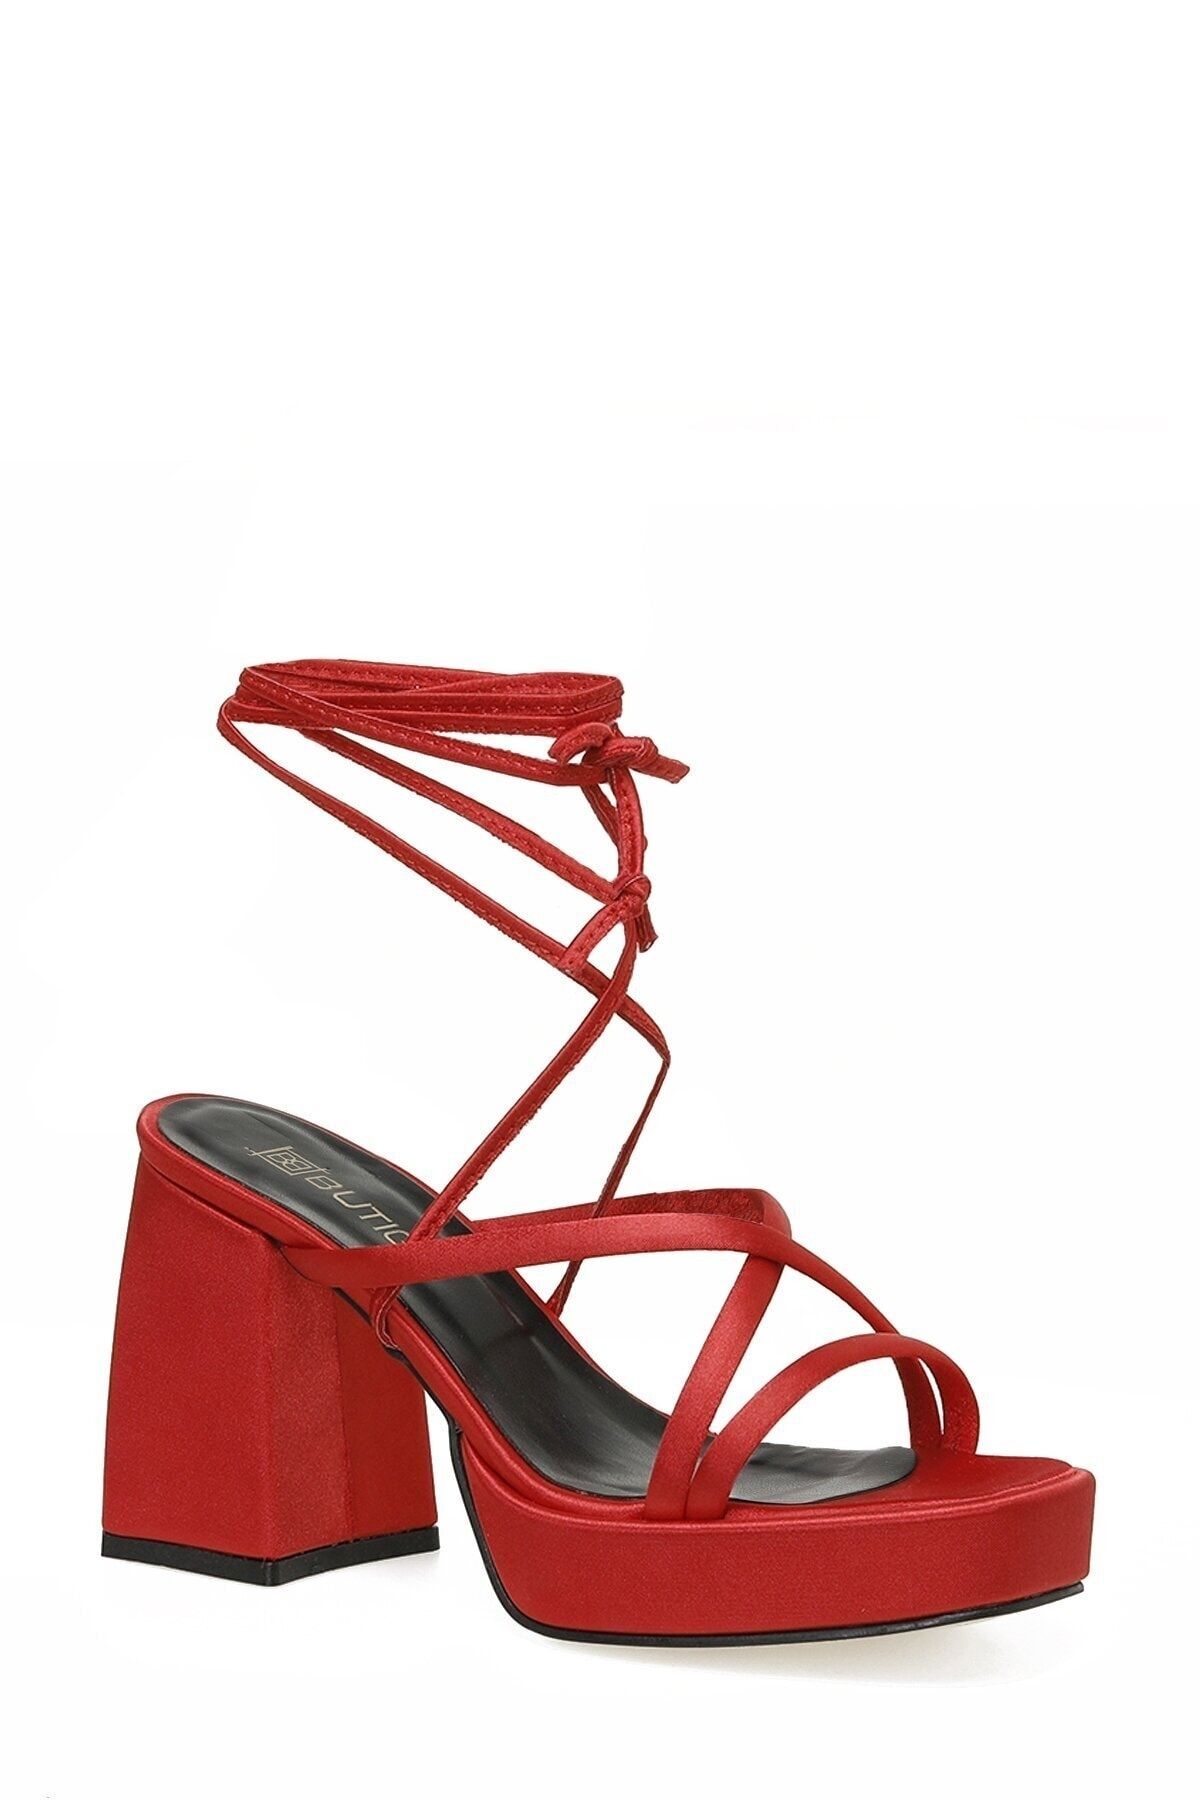 Butigo DEKA 3FX Kırmızı Kadın Topuklu Sandalet